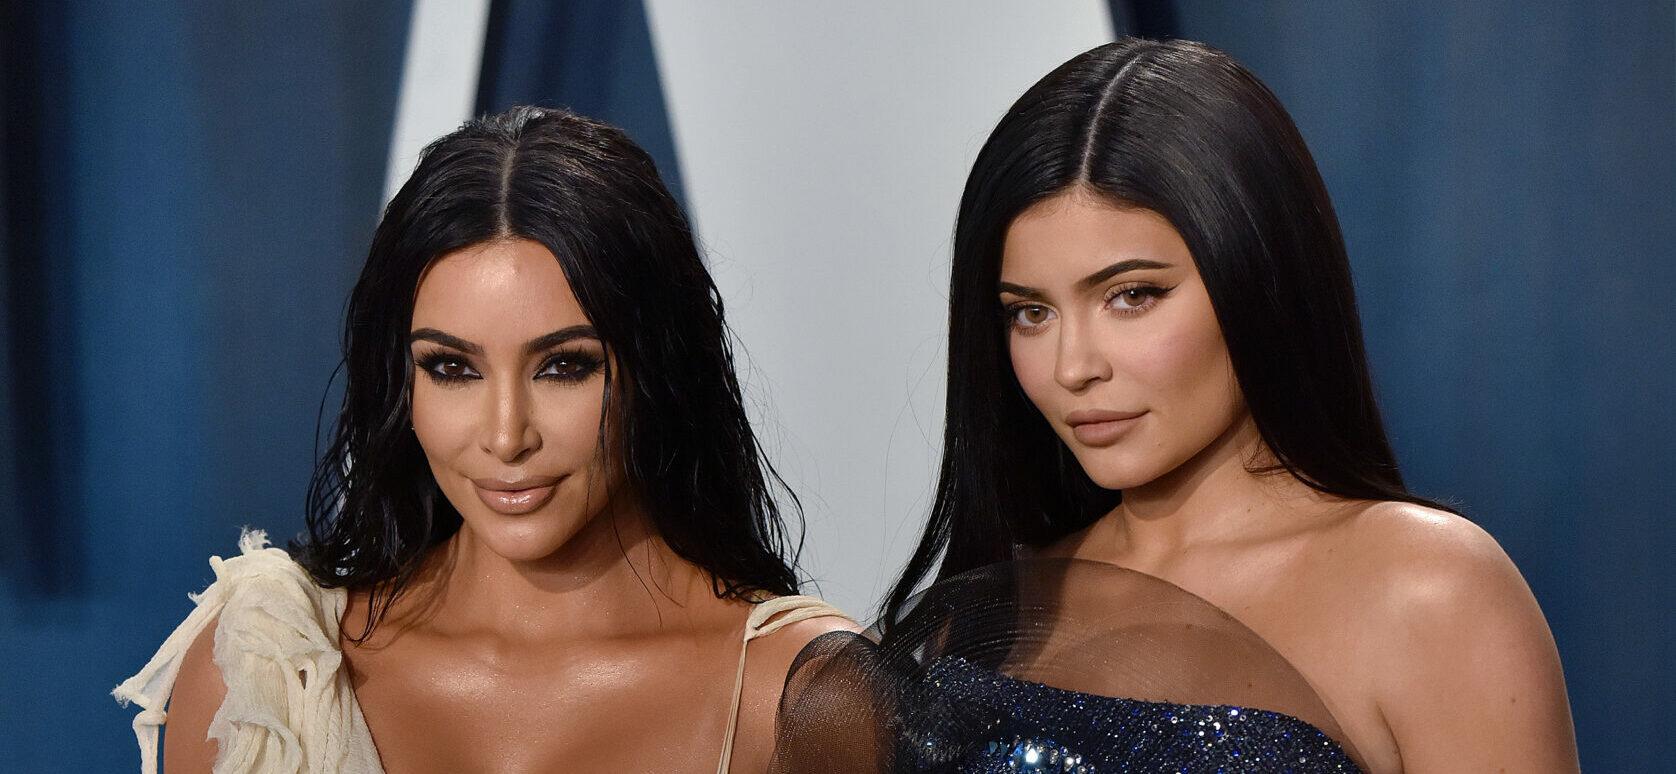 Kylie Jenner & Kim Kardashian’s Photoshopping Allegations Catch Up With Them!